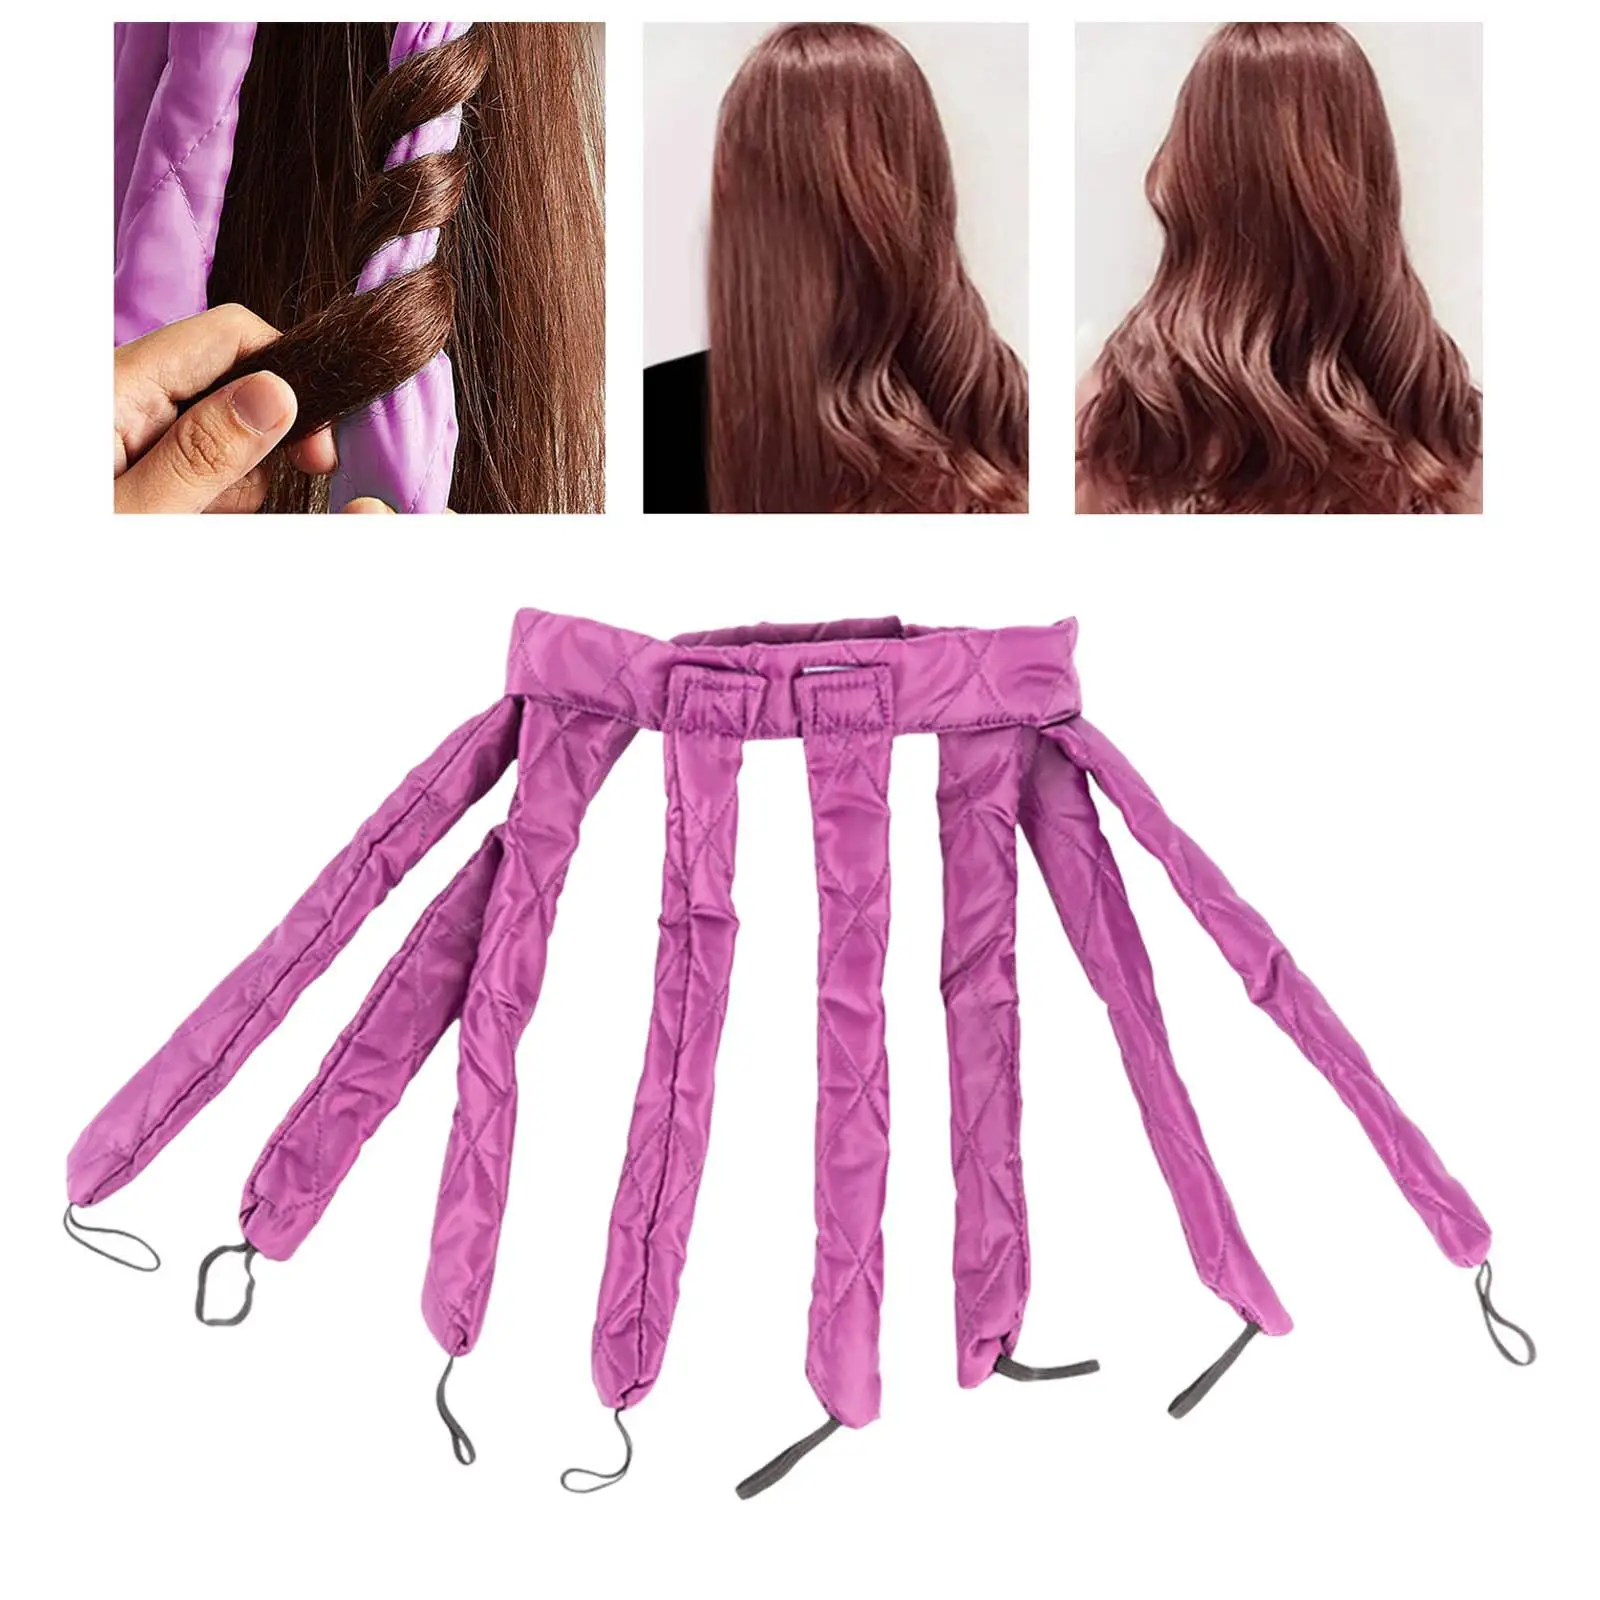 Octopus Design Heatless Hair Curler Hair Styling Tool Wave Hair Curler No Heat Curling Rod Curling Wand Women Girl Natural Curls